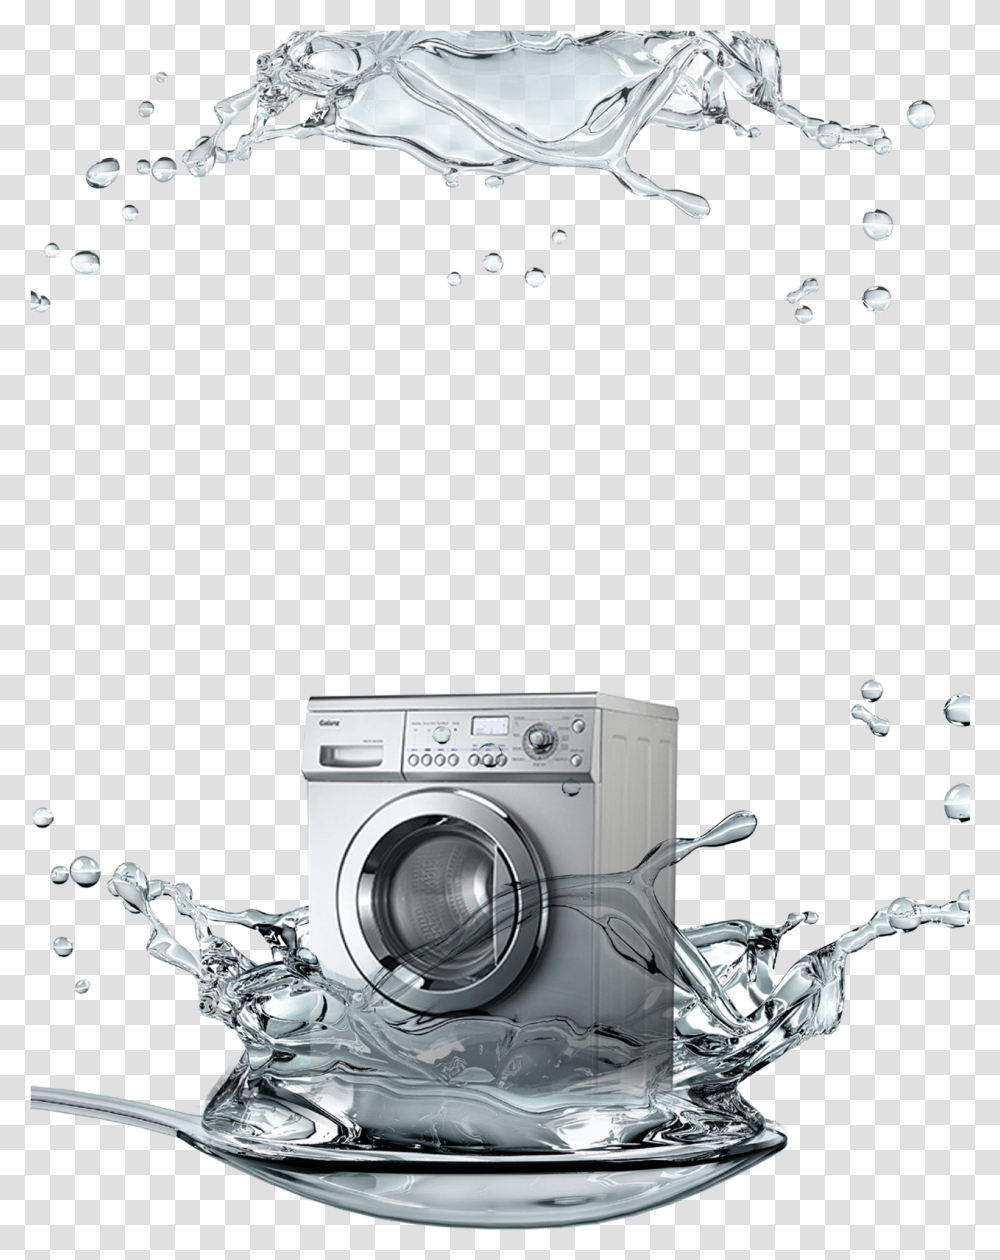 Washing Machine, Washer, Appliance, Laundry, Dryer Transparent Png